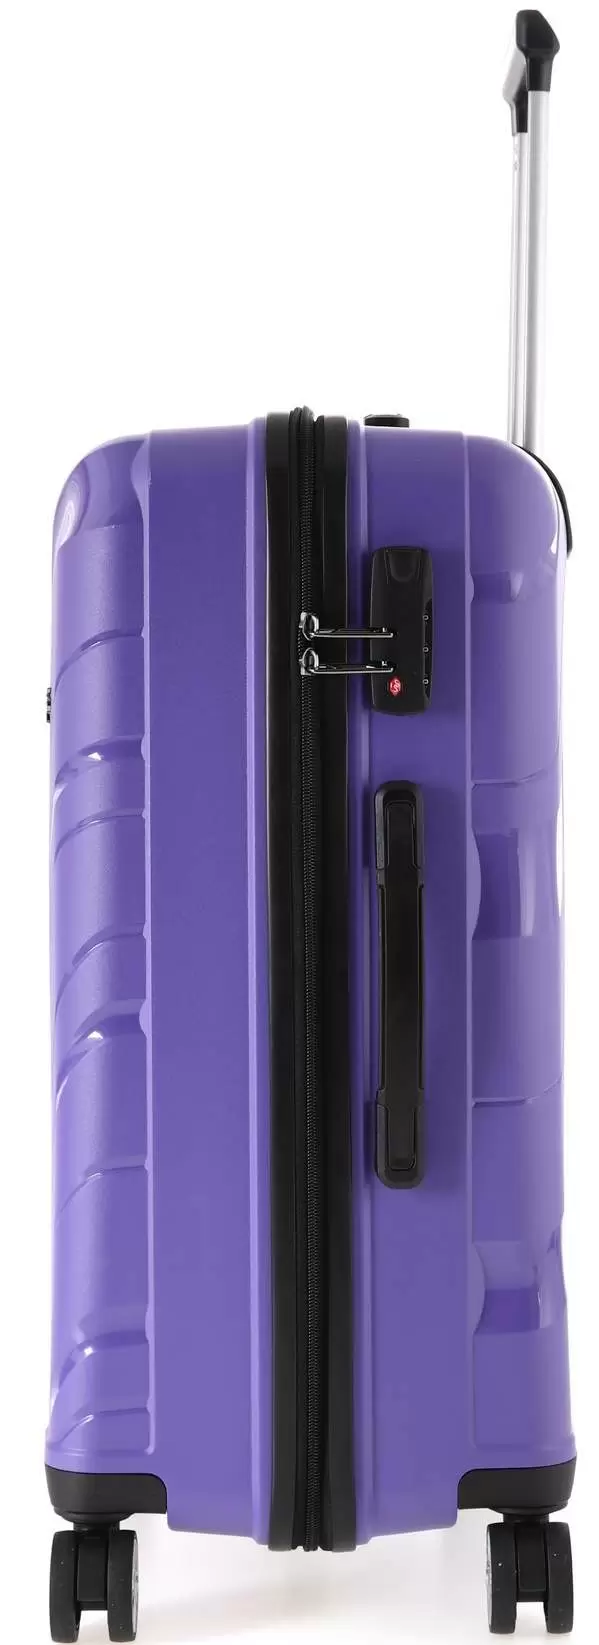 Valiză CCS 5223 L, violet